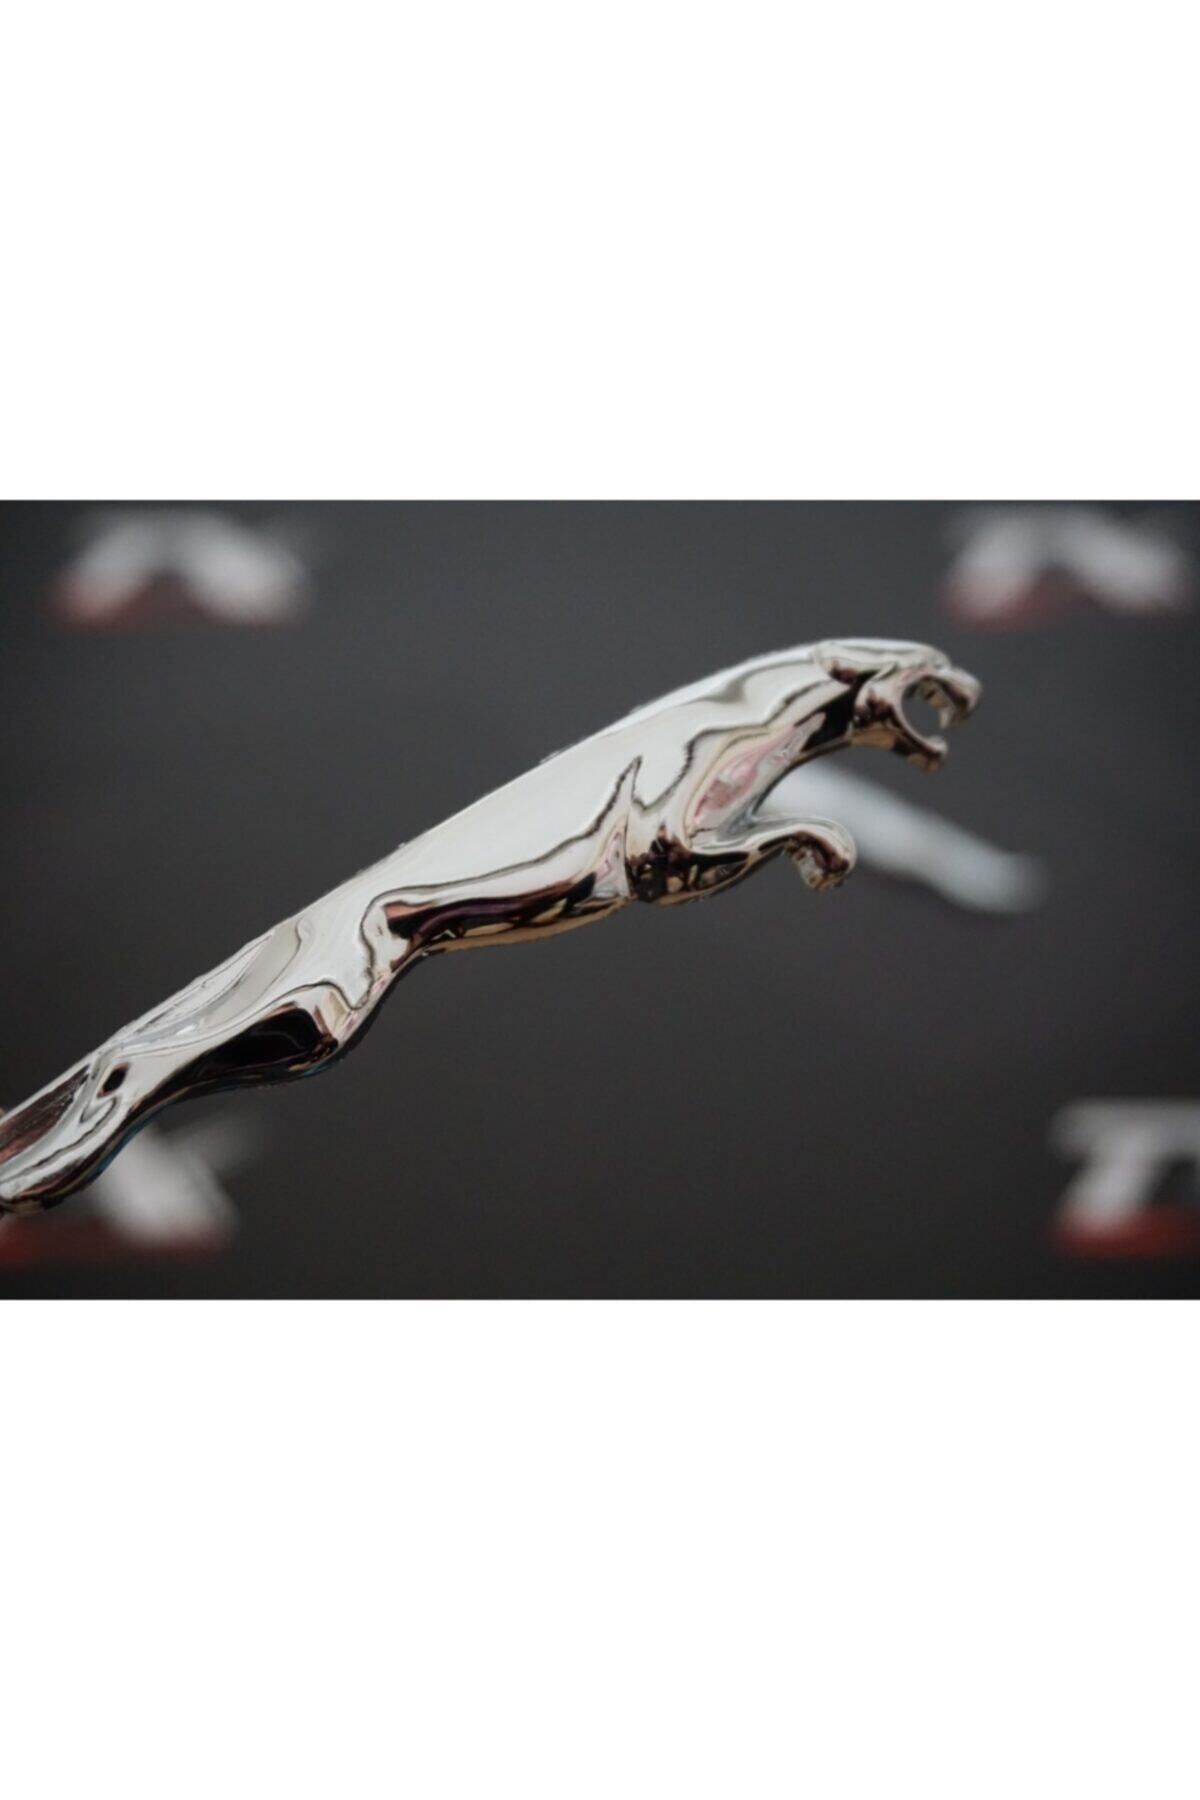 Jaguar Dk Tuning Çamurluk Yanı 3m 3d Krom Metal Logo Amblem